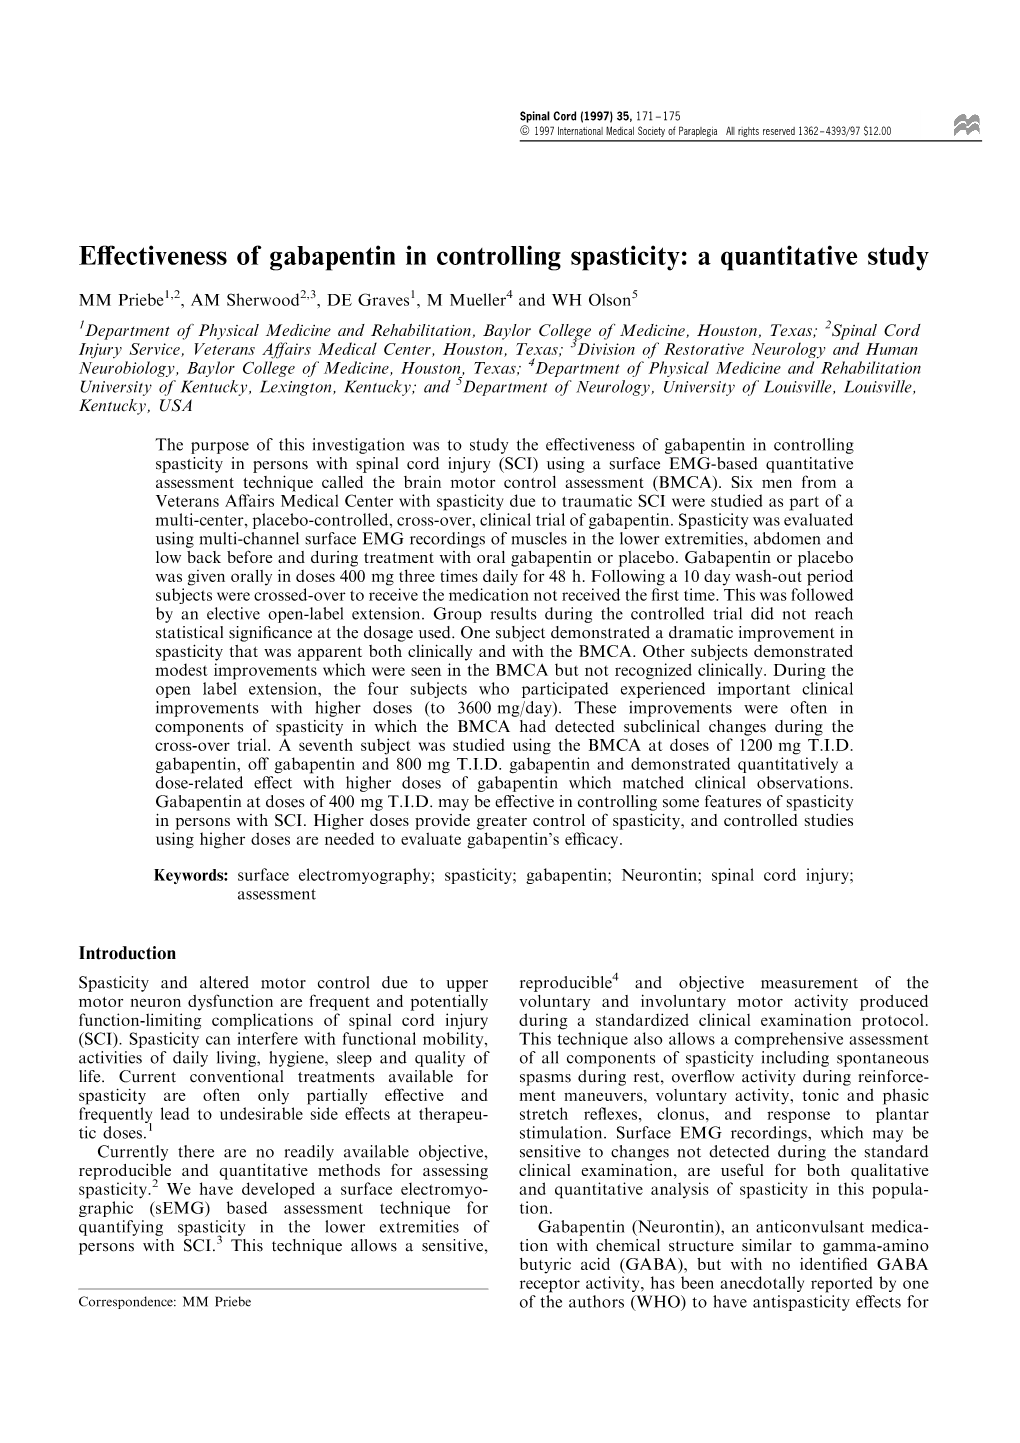 E€Ectiveness of Gabapentin in Controlling Spasticity: a Quantitative